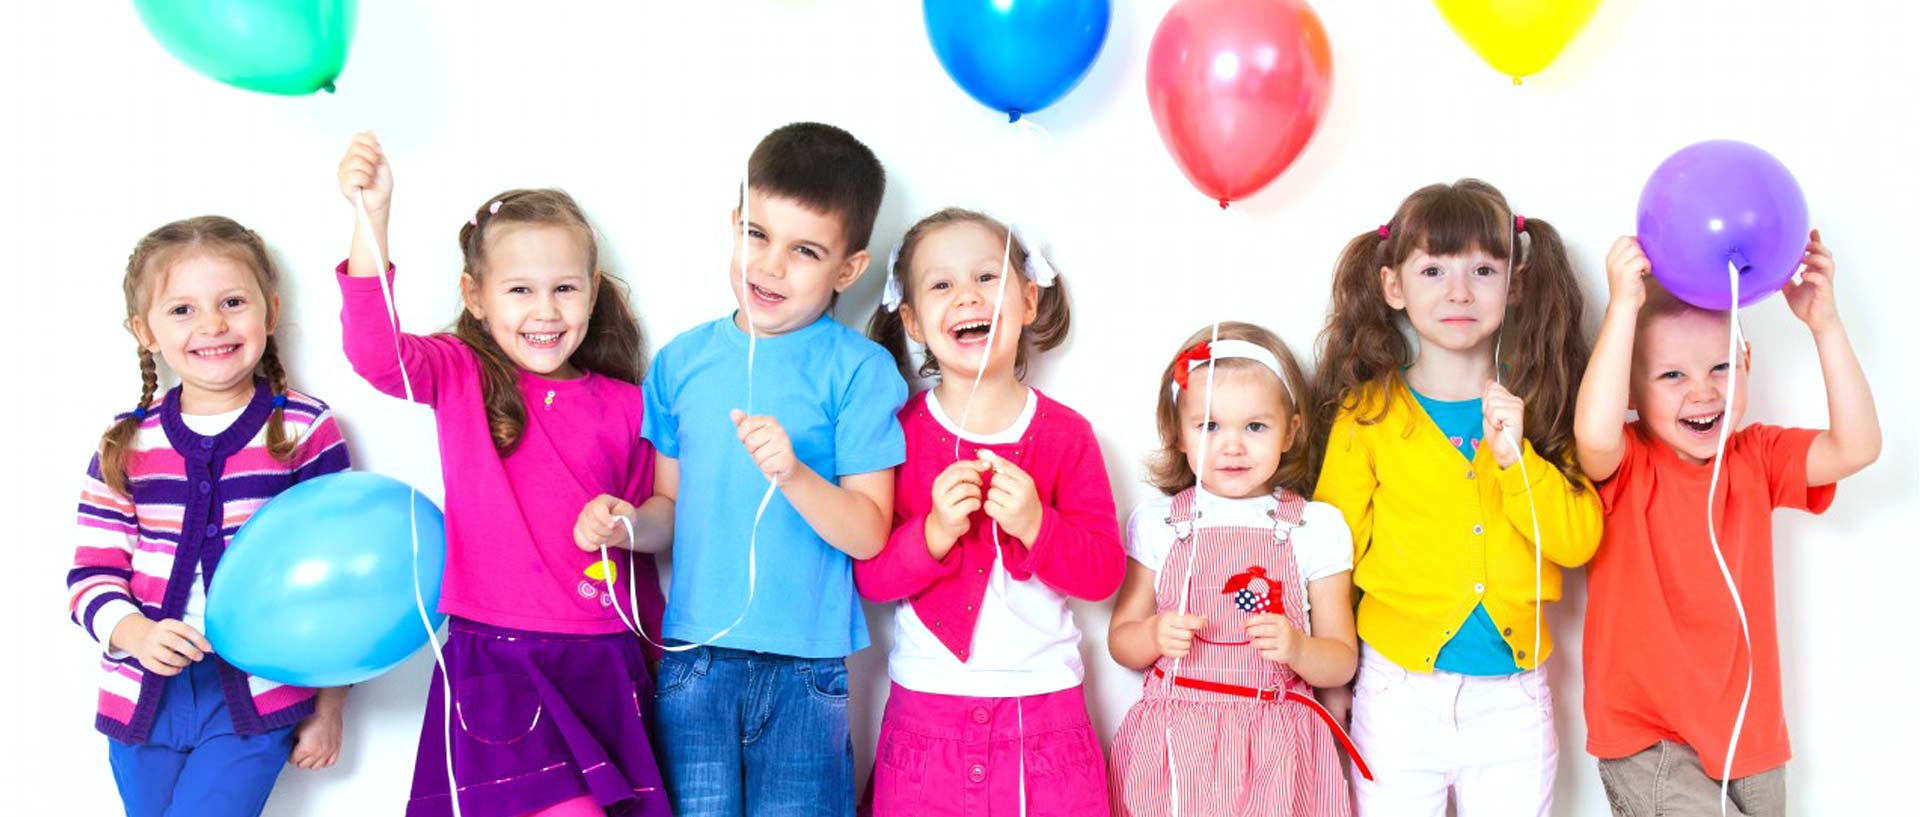 kids holding balloons